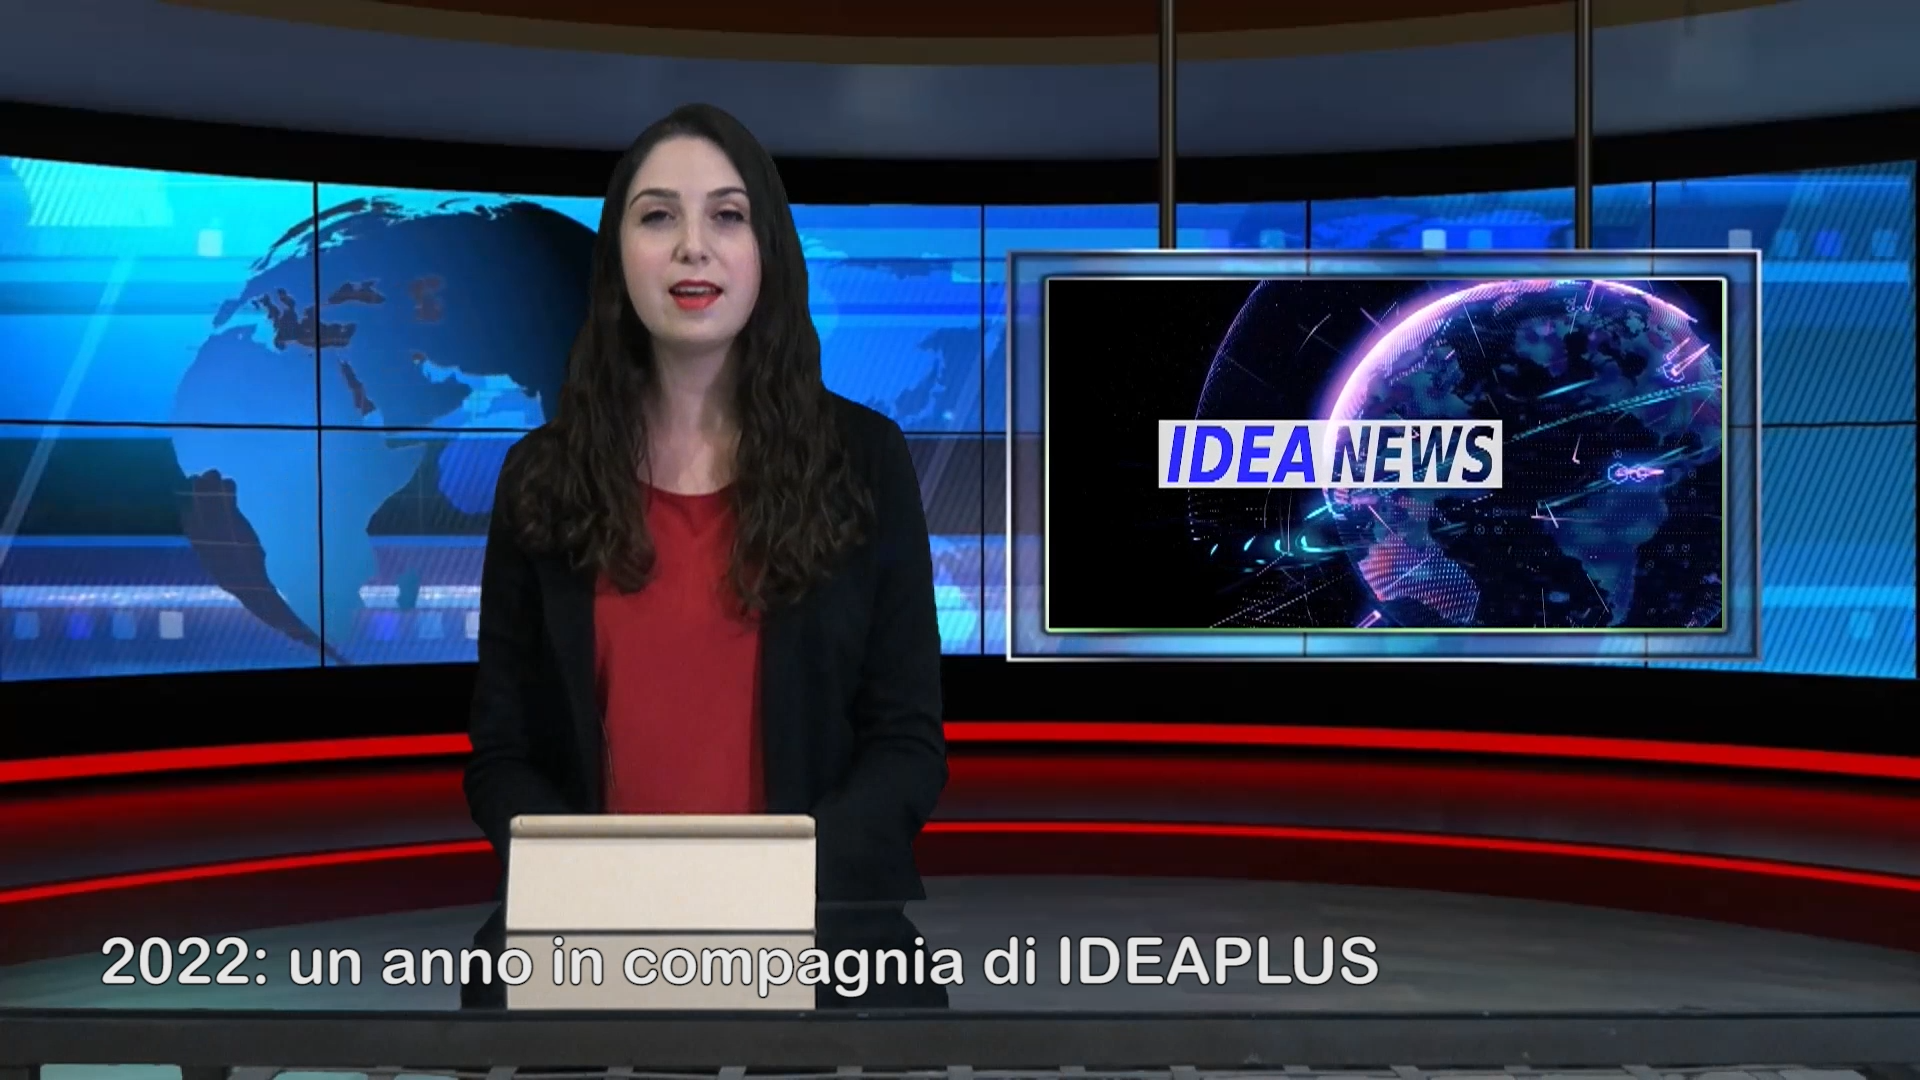 IdeaNews